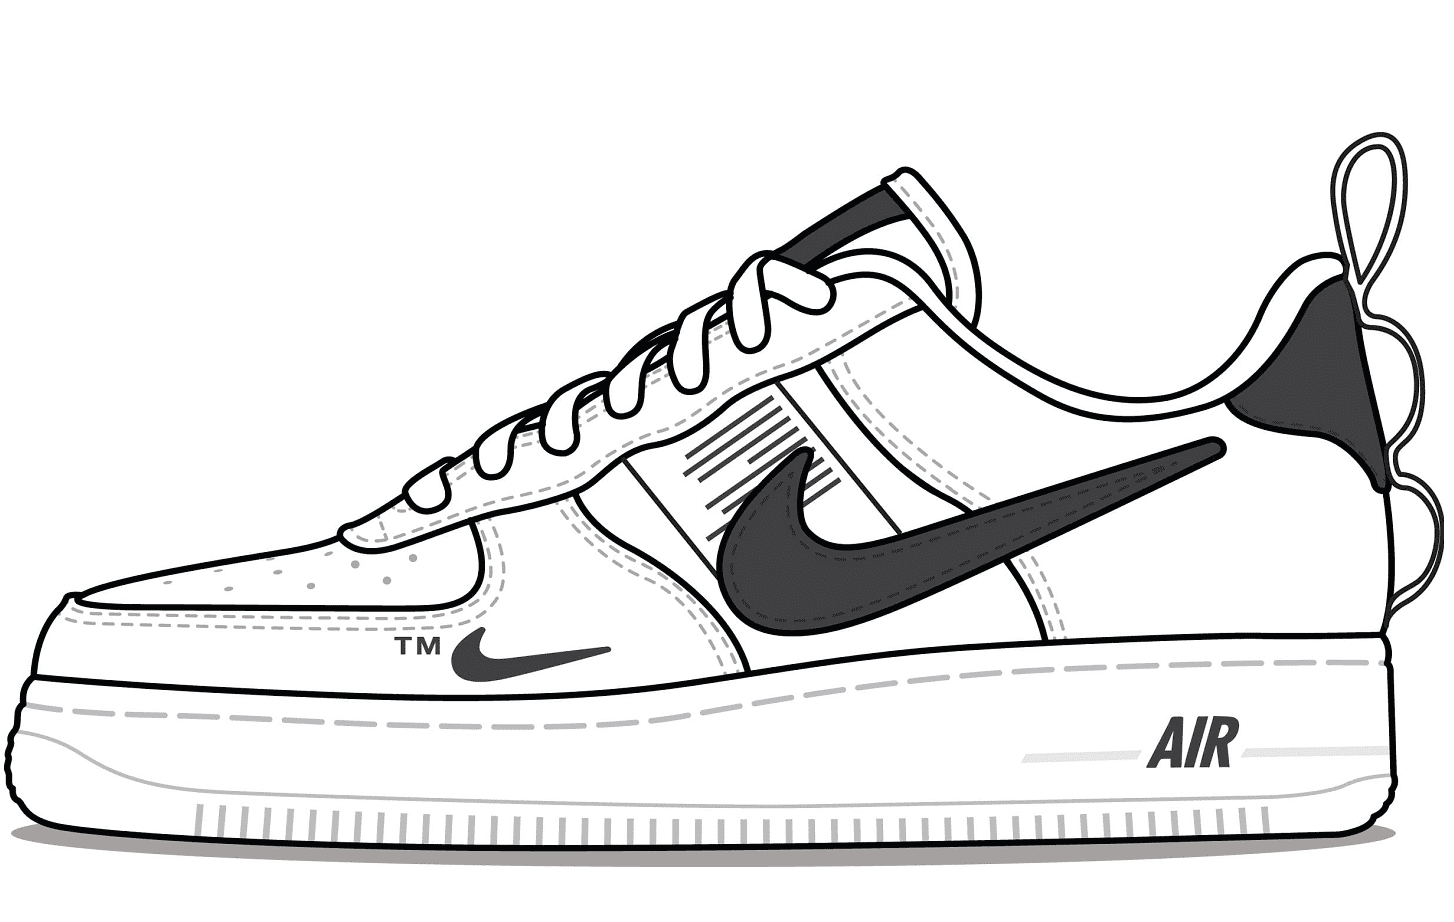 Nike Air Jordan Shoe Coloring Page